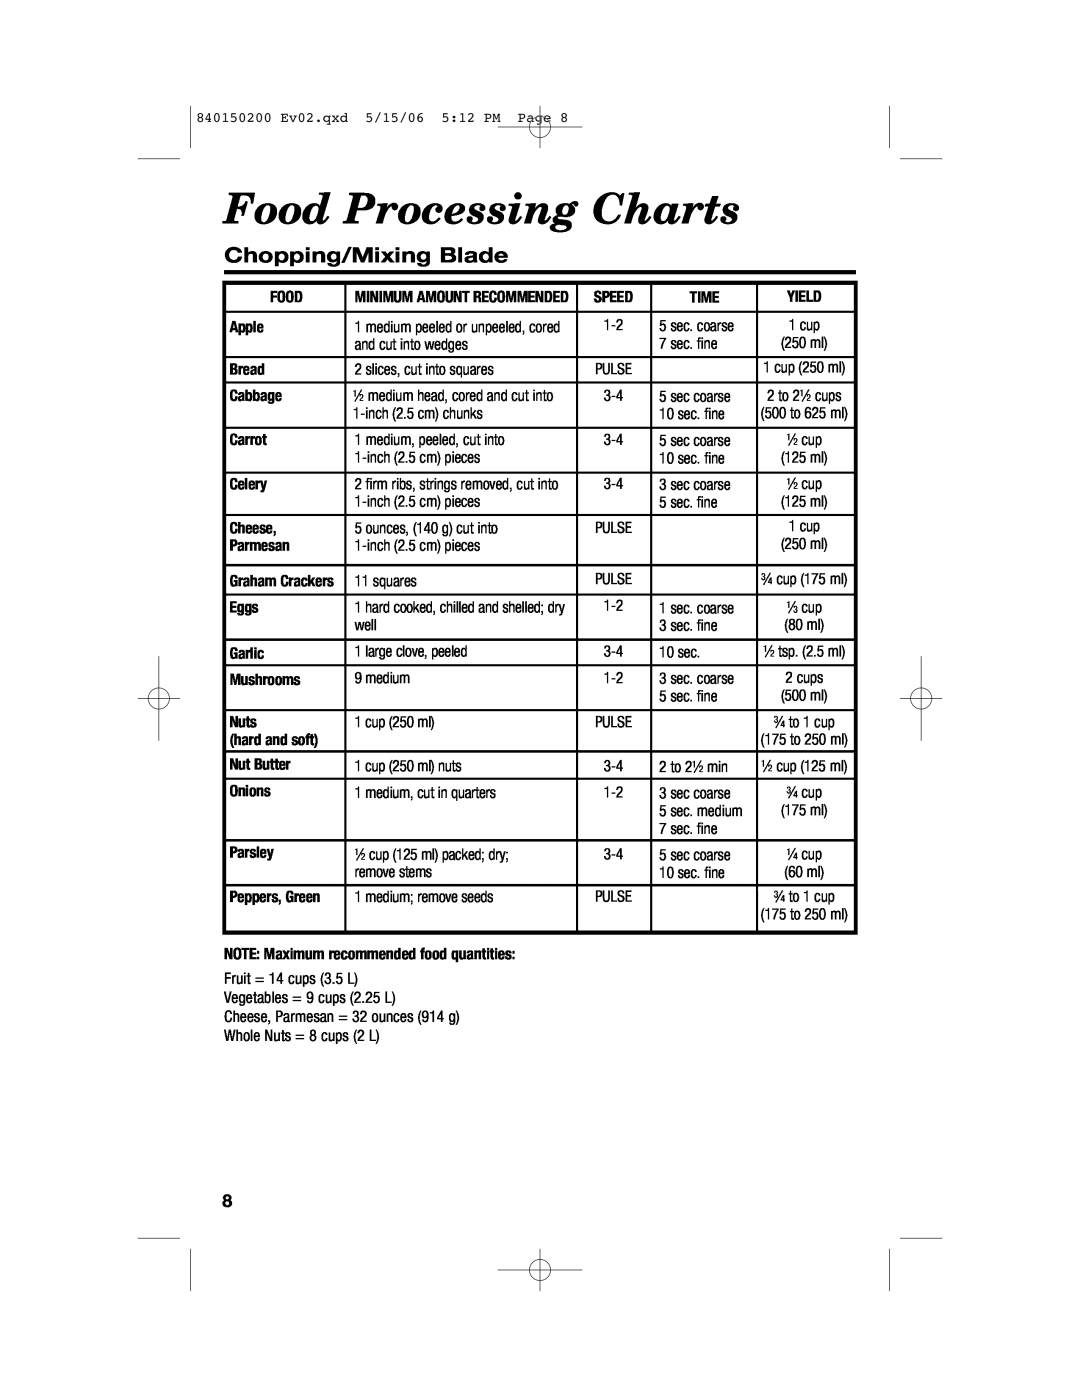 Proctor-Silex 840150200 manual Food Processing Charts, Chopping/Mixing Blade 